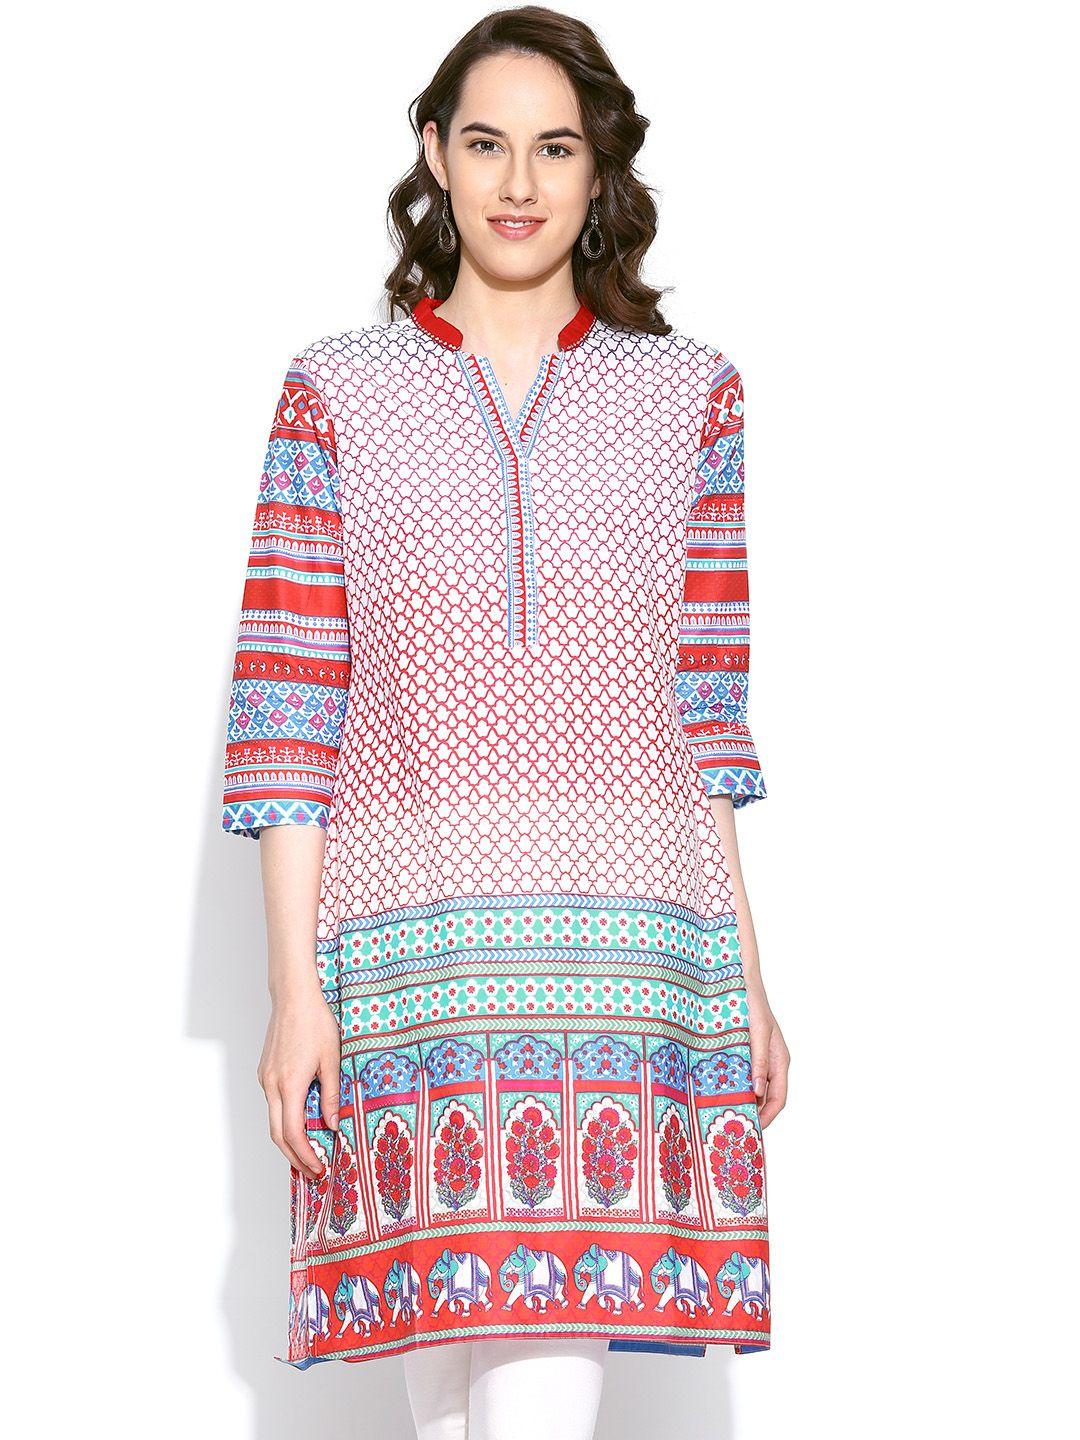 rangmanch by pantaloons women multicoloured printed kurta